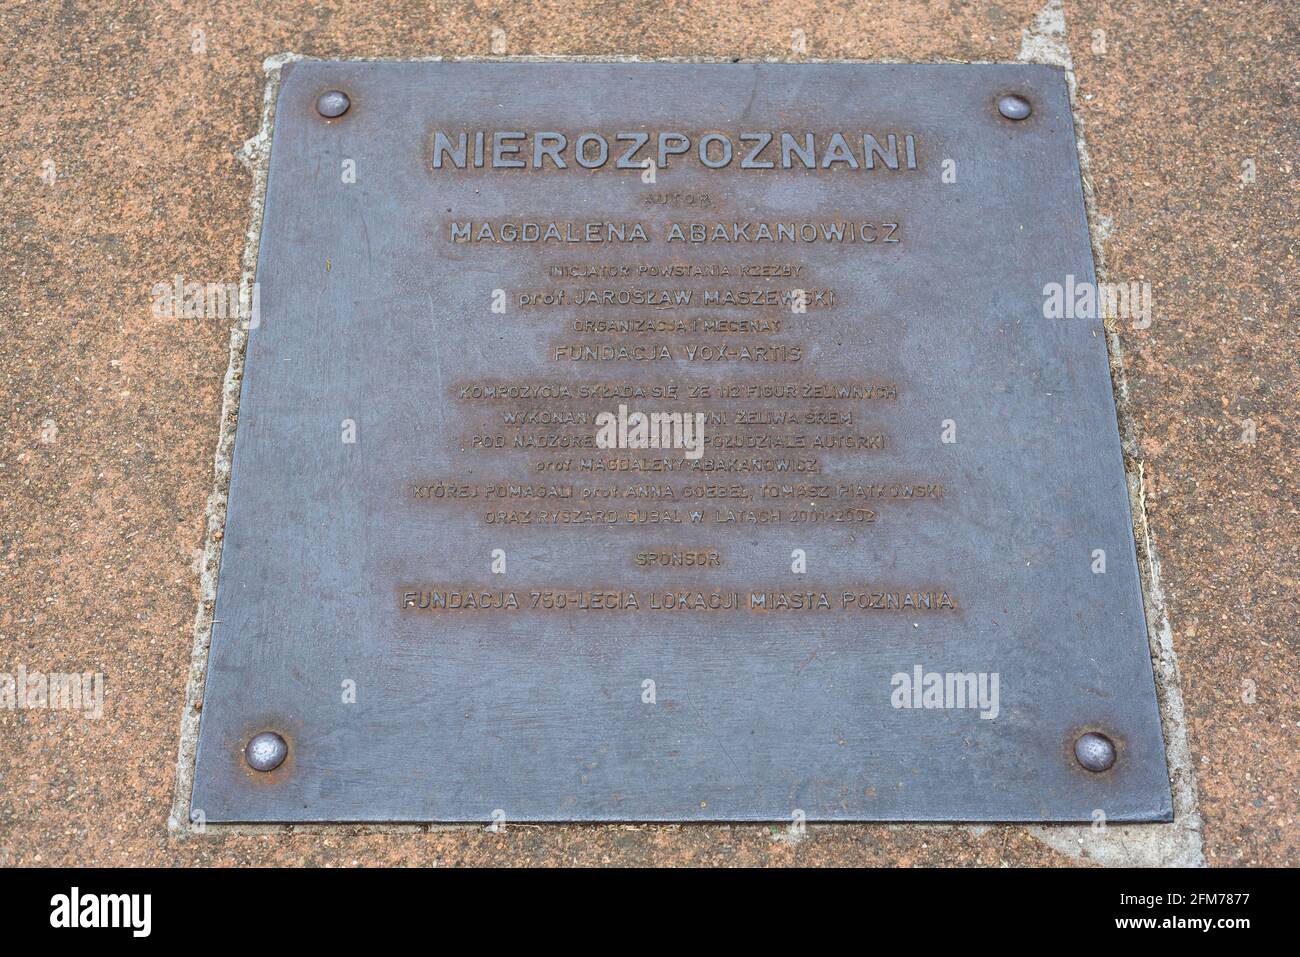 Poznan, wielkopolskie, Poland, 06.07.2019: Information plate on the 'Unrecognized' sculpture by Magdalena Abakanowicz in Cytadela Park, Poznan, Poland Stock Photo